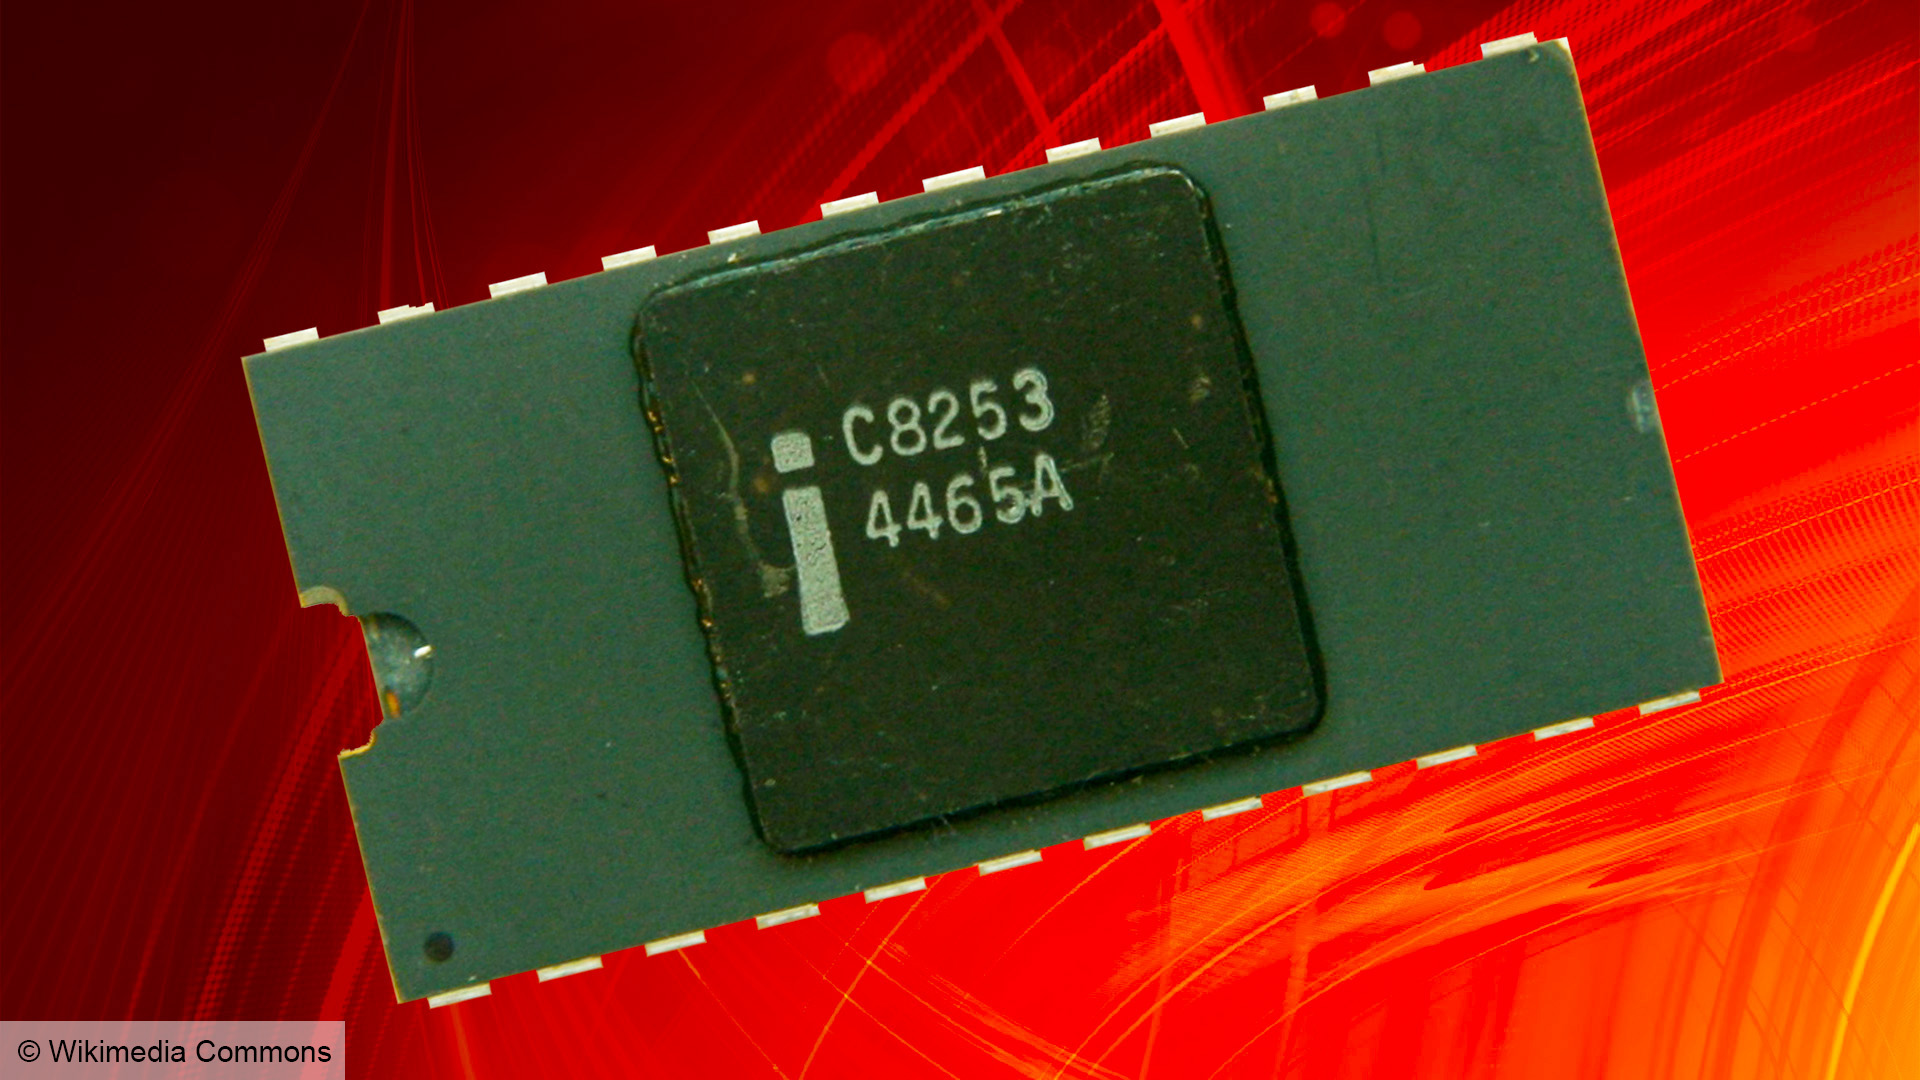 PC speaker: The Intel 8253 chip drove the original PC speaker